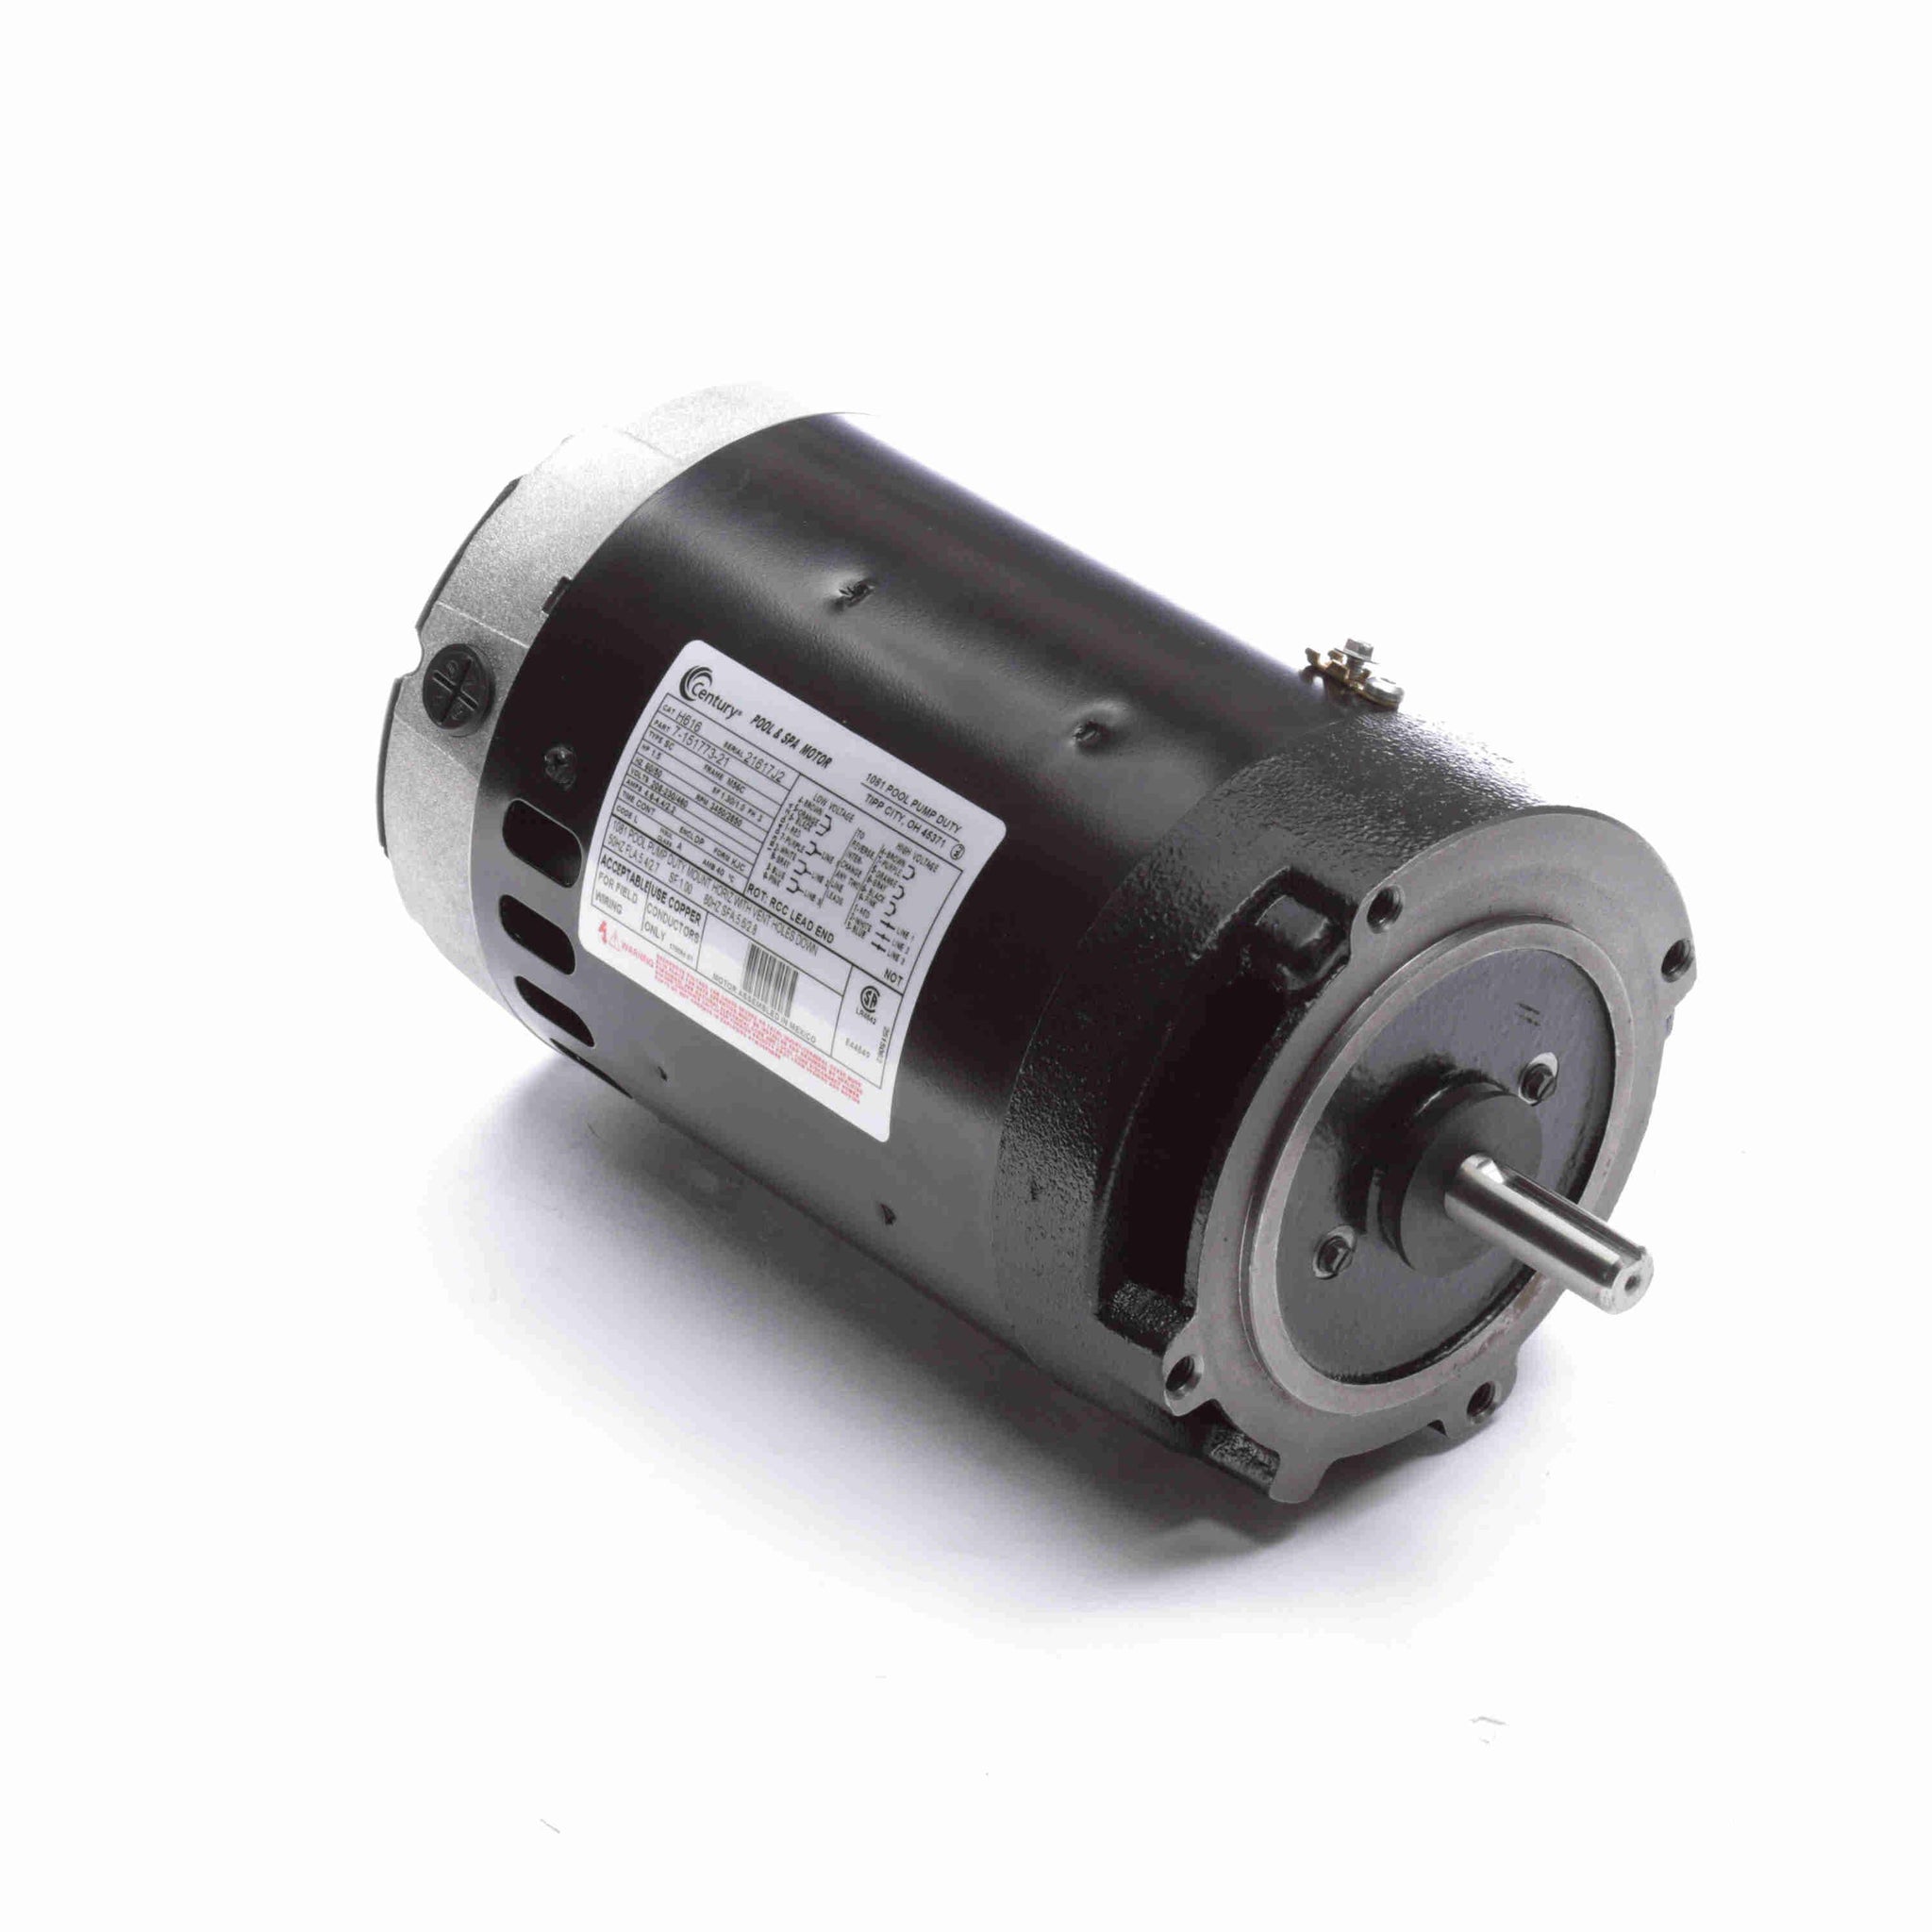 H616 -  1.5 HP Pool Pump Motor, 3 phase, 3600 RPM, 208-230/460 V, 56C Frame, ODP - Hardware & Moreee